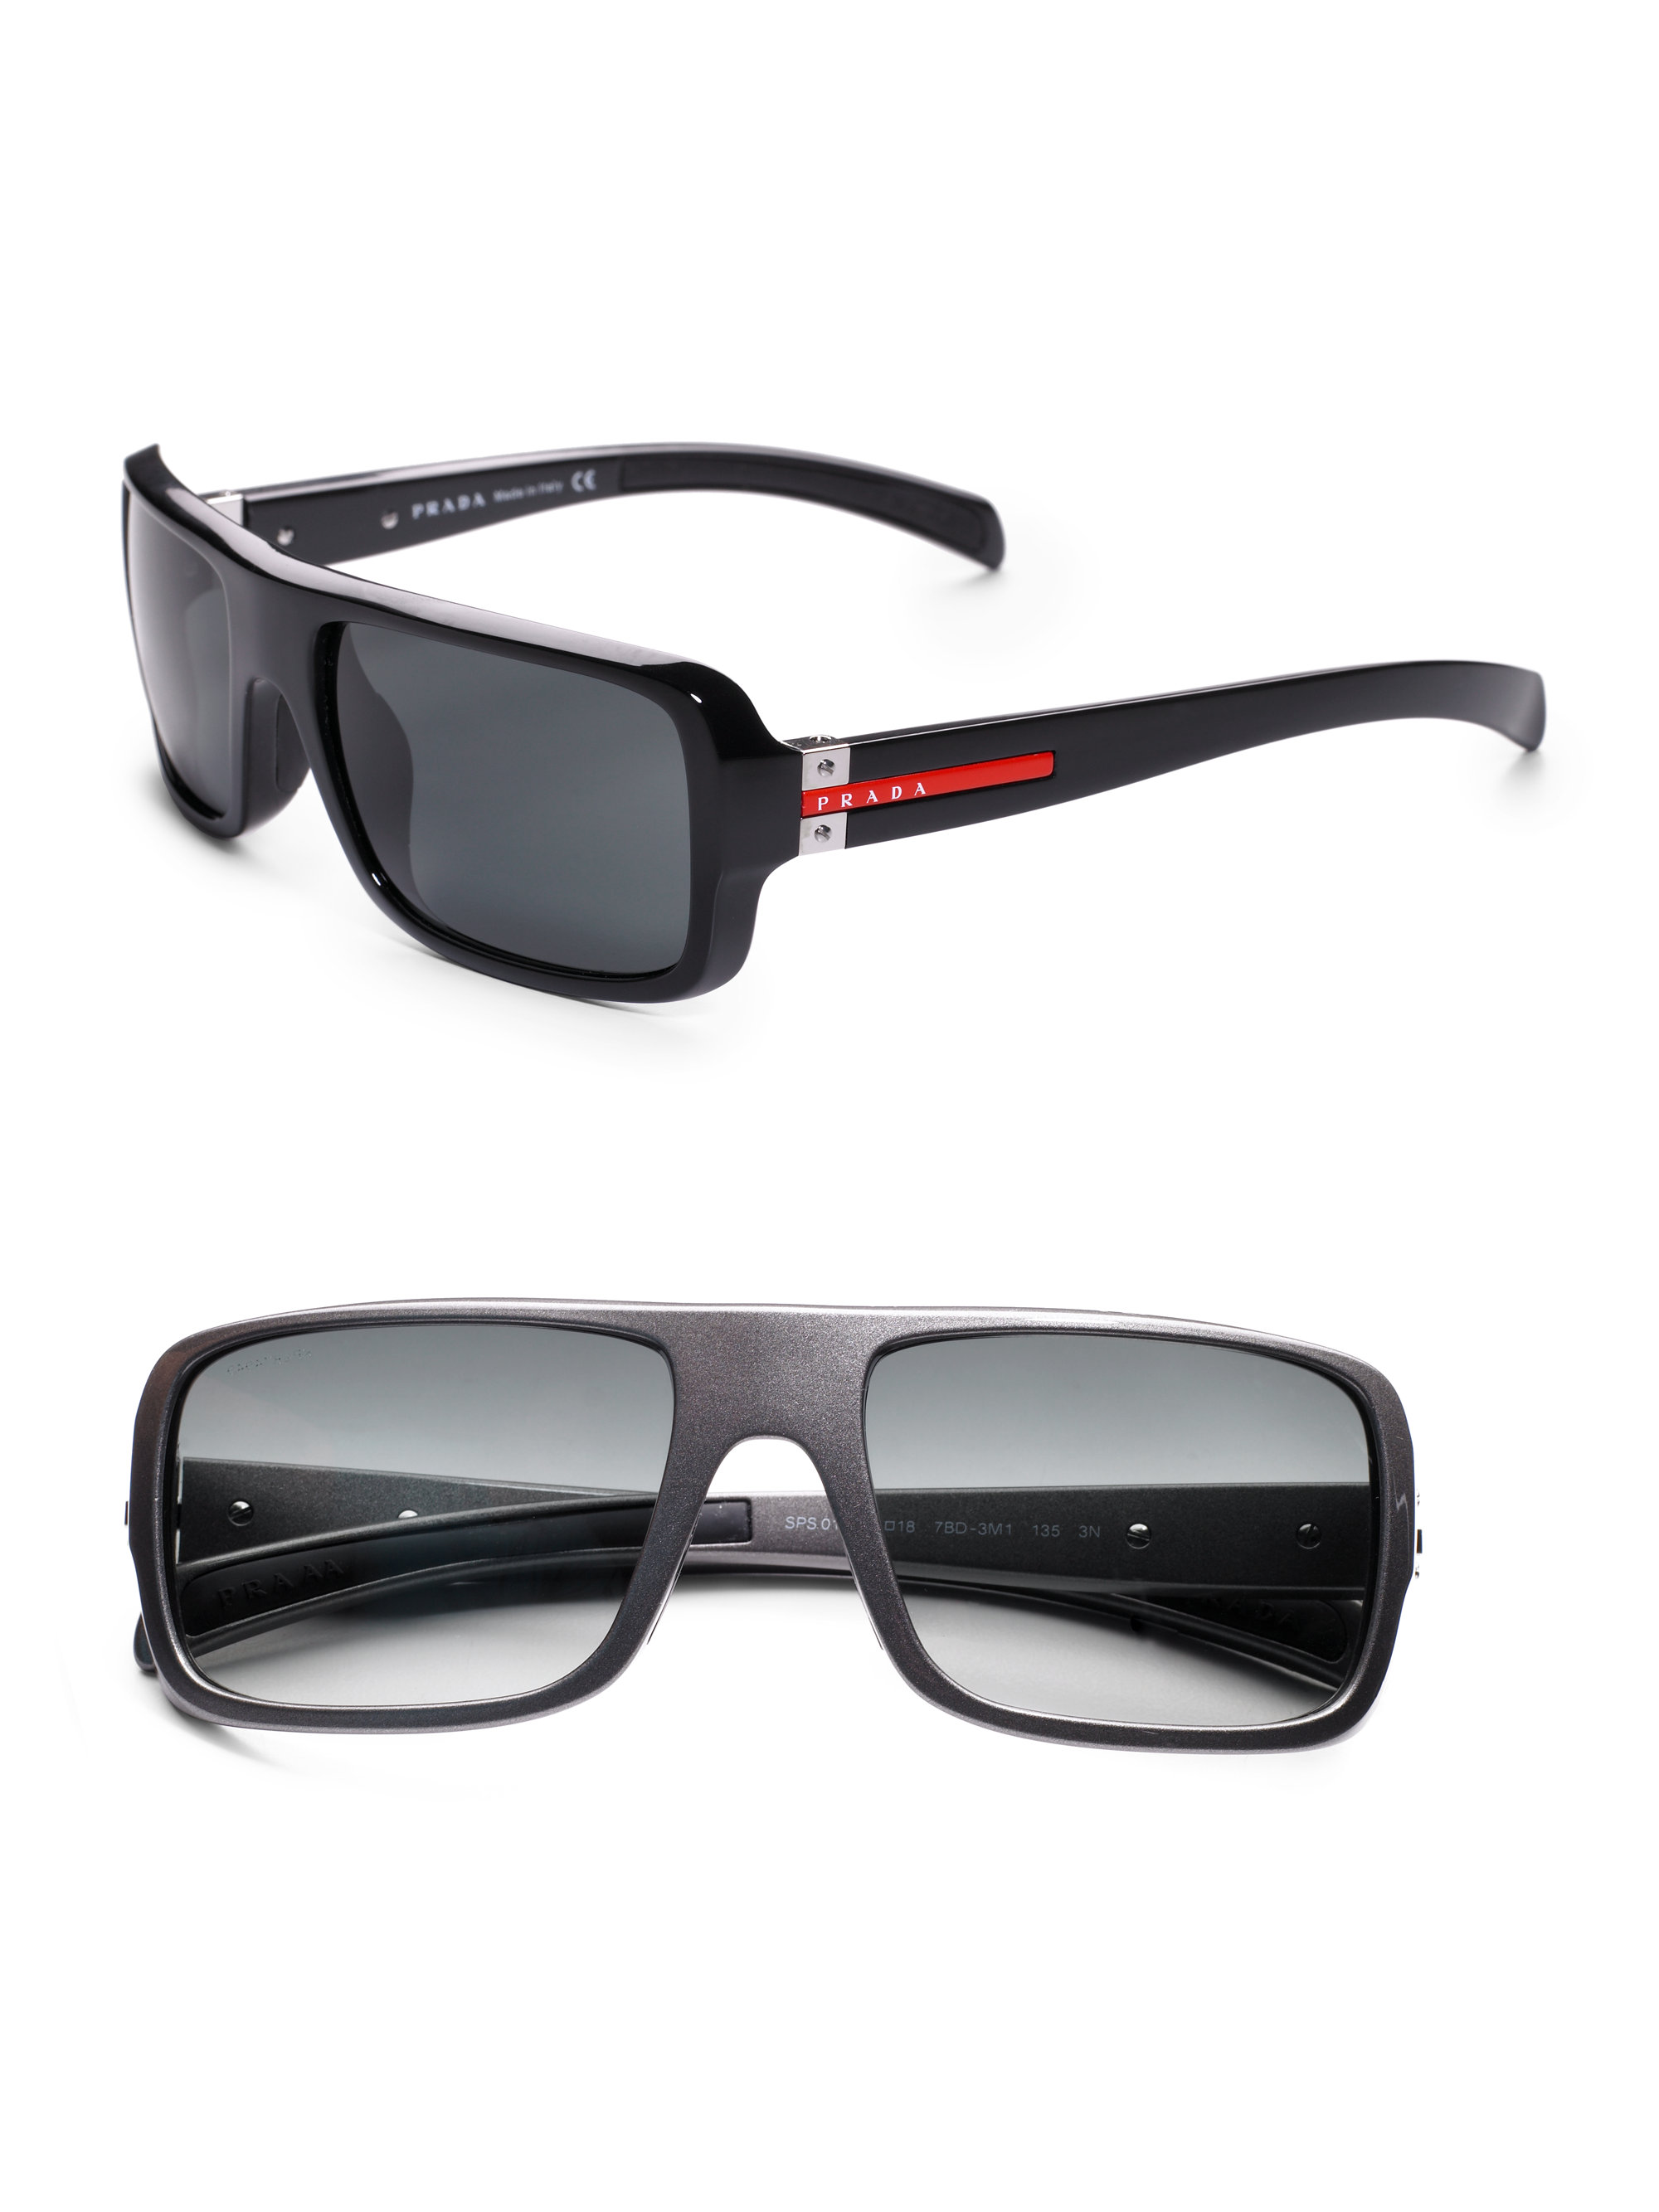 Lyst - Prada Square Frame Sunglasses in Black for Men